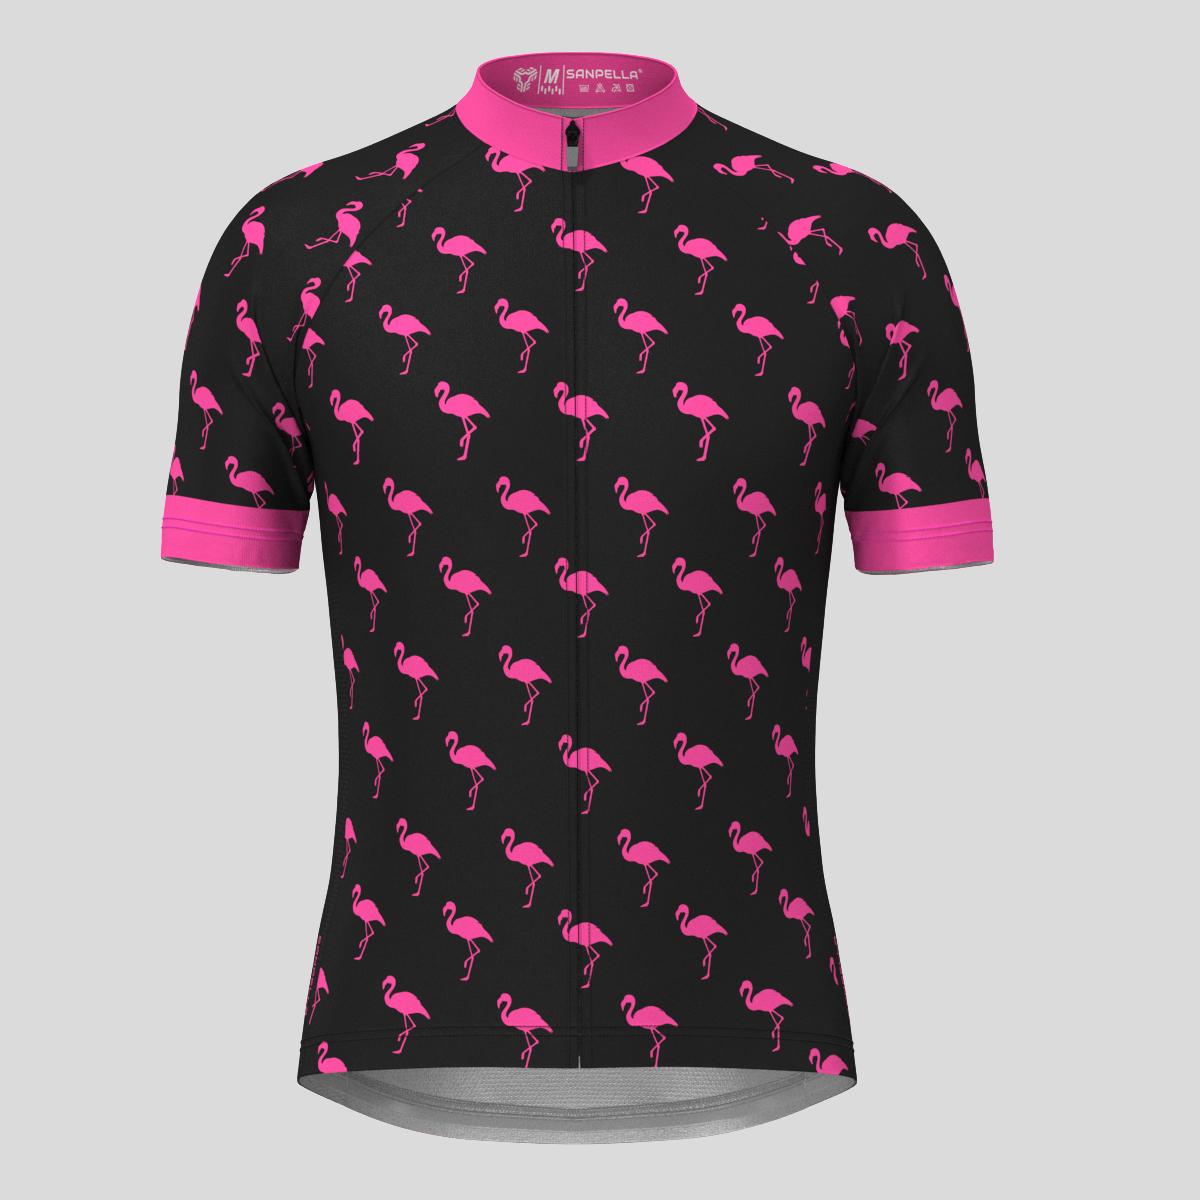 Flamingo Men's Cycling Jersey - Pink/Black